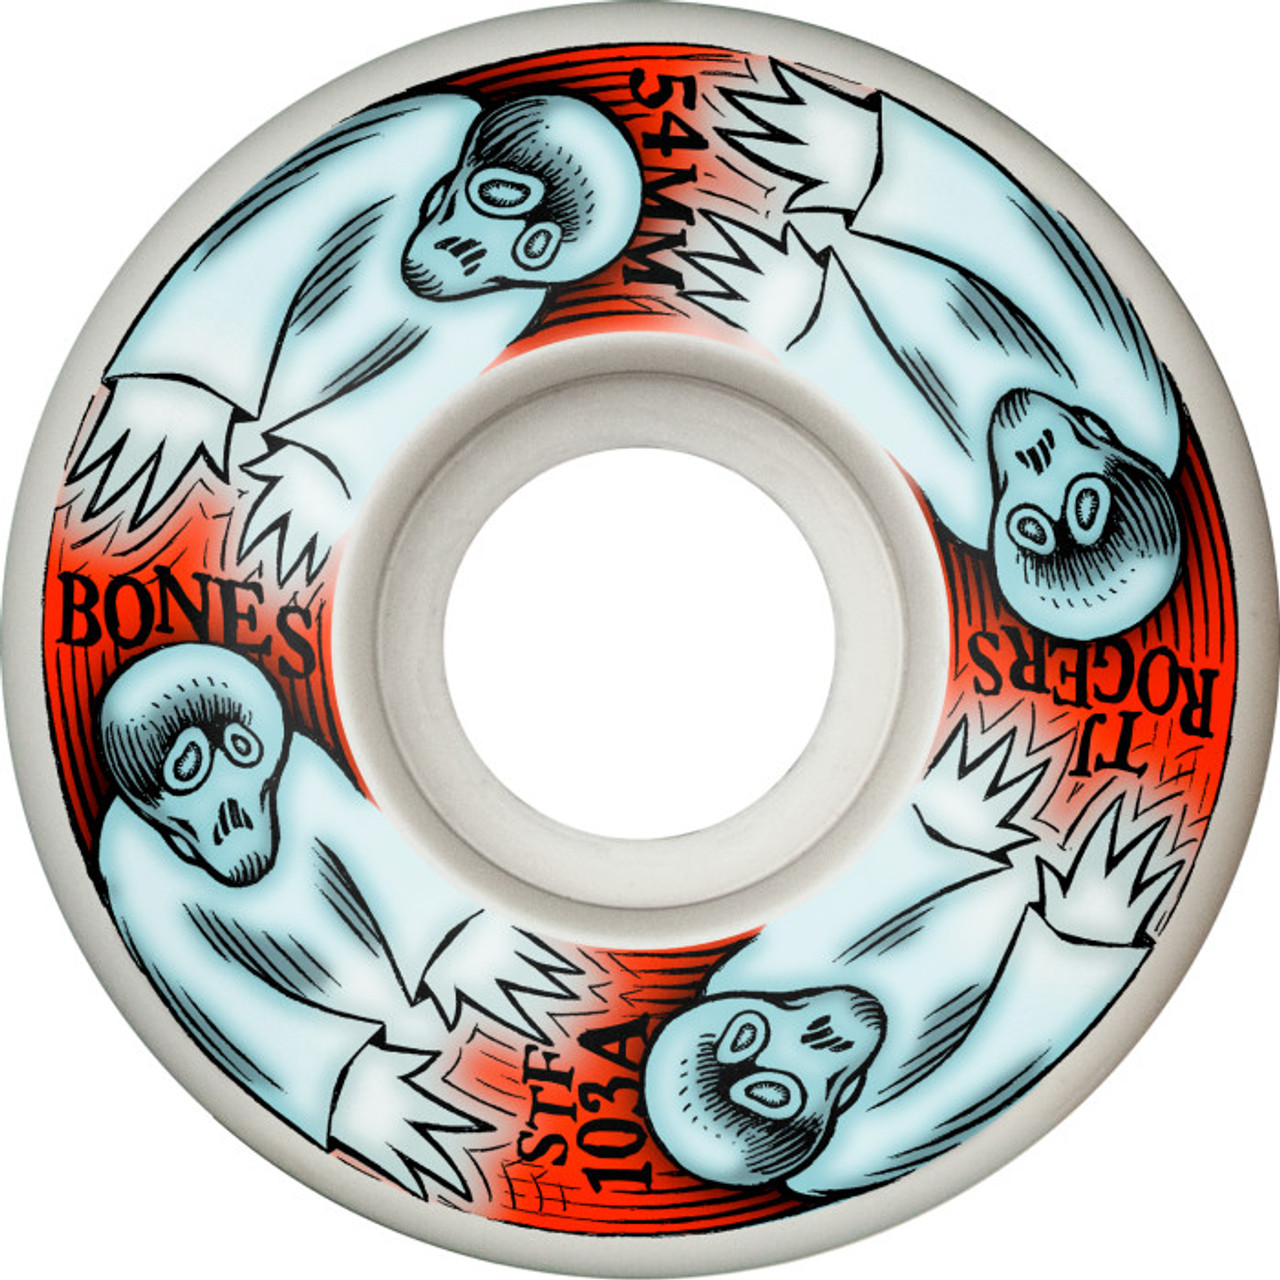 Bones Rogers V3 Whirling Specters Slims Wheels Set Red Blue 52mm 103a